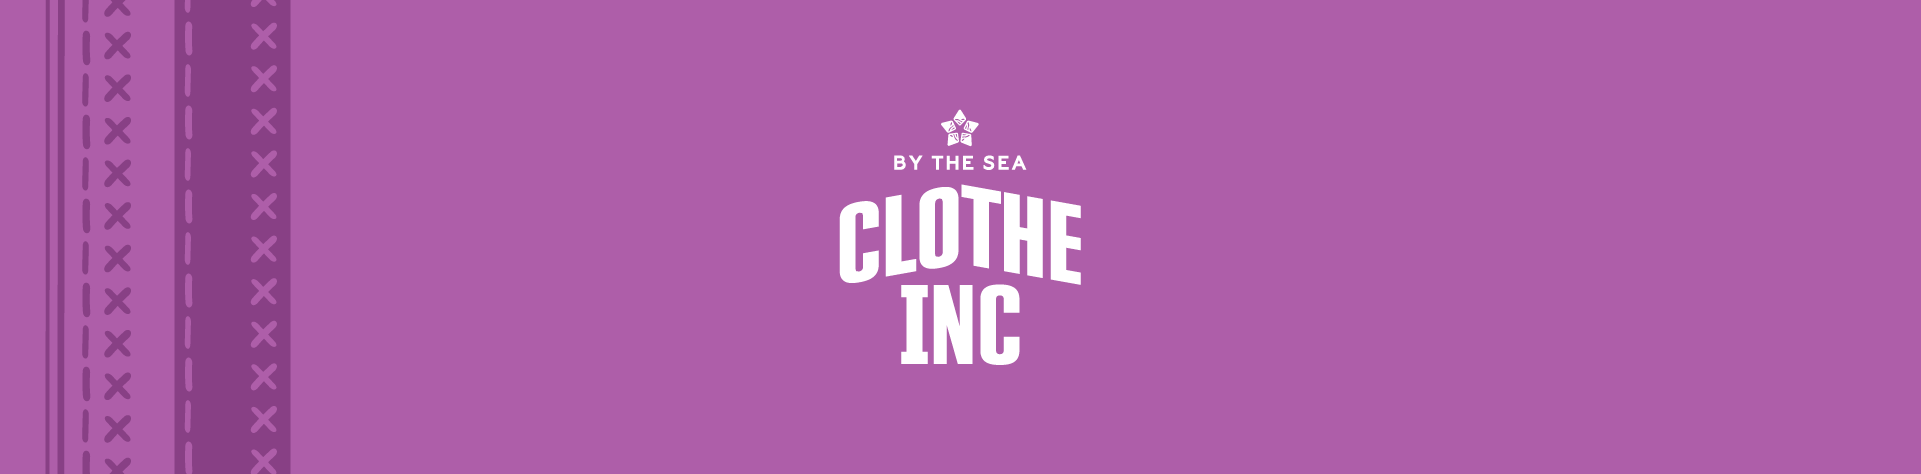 By The Sea Clothe Inc